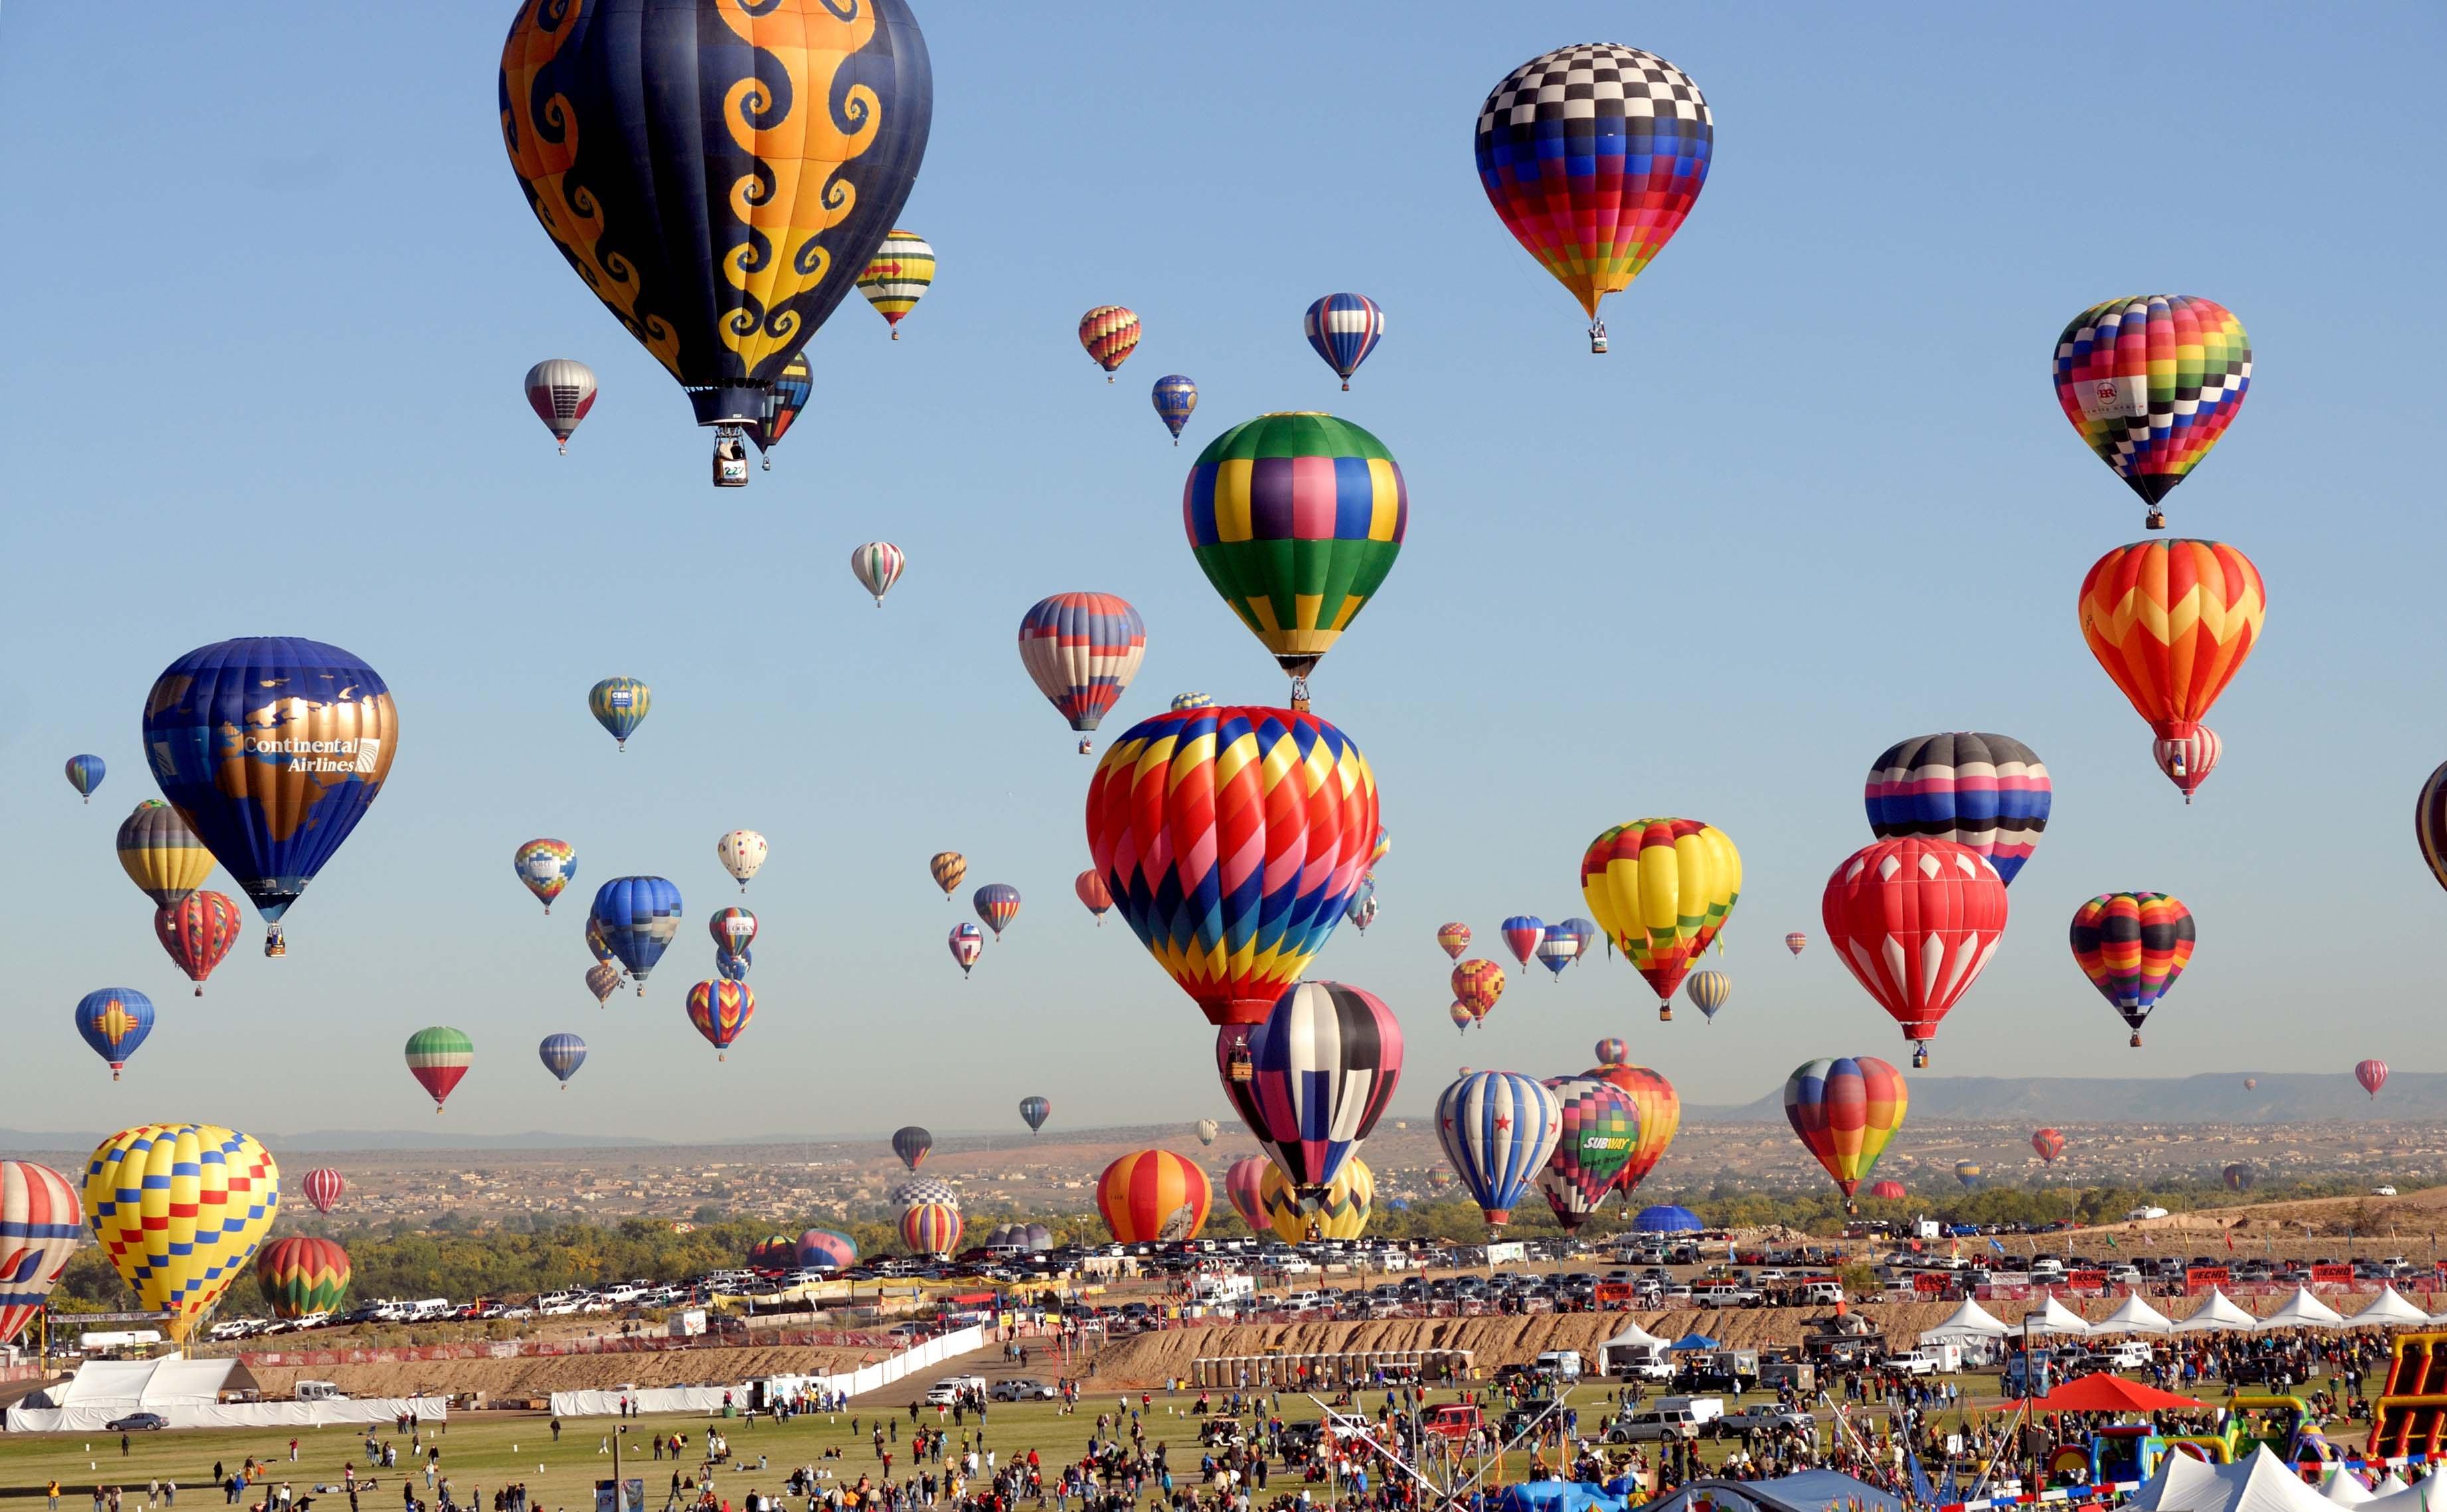 Albuquerque International Balloon Fiesta. Walk Memory Lane